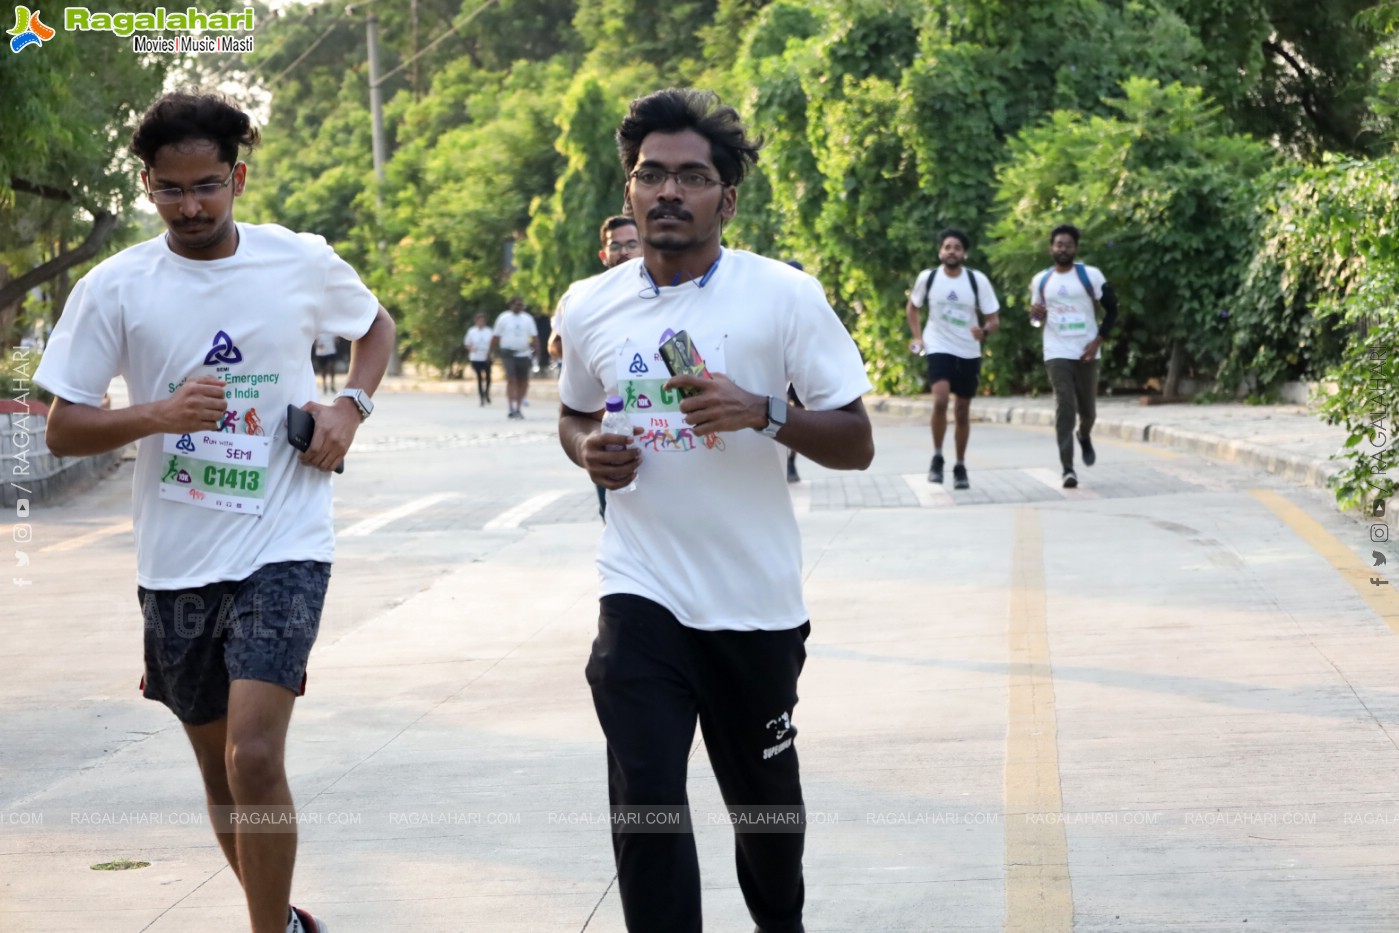 Society for Emergency medicine India- 5K, 10K Marathon and Cyclathon10k at Thrill City